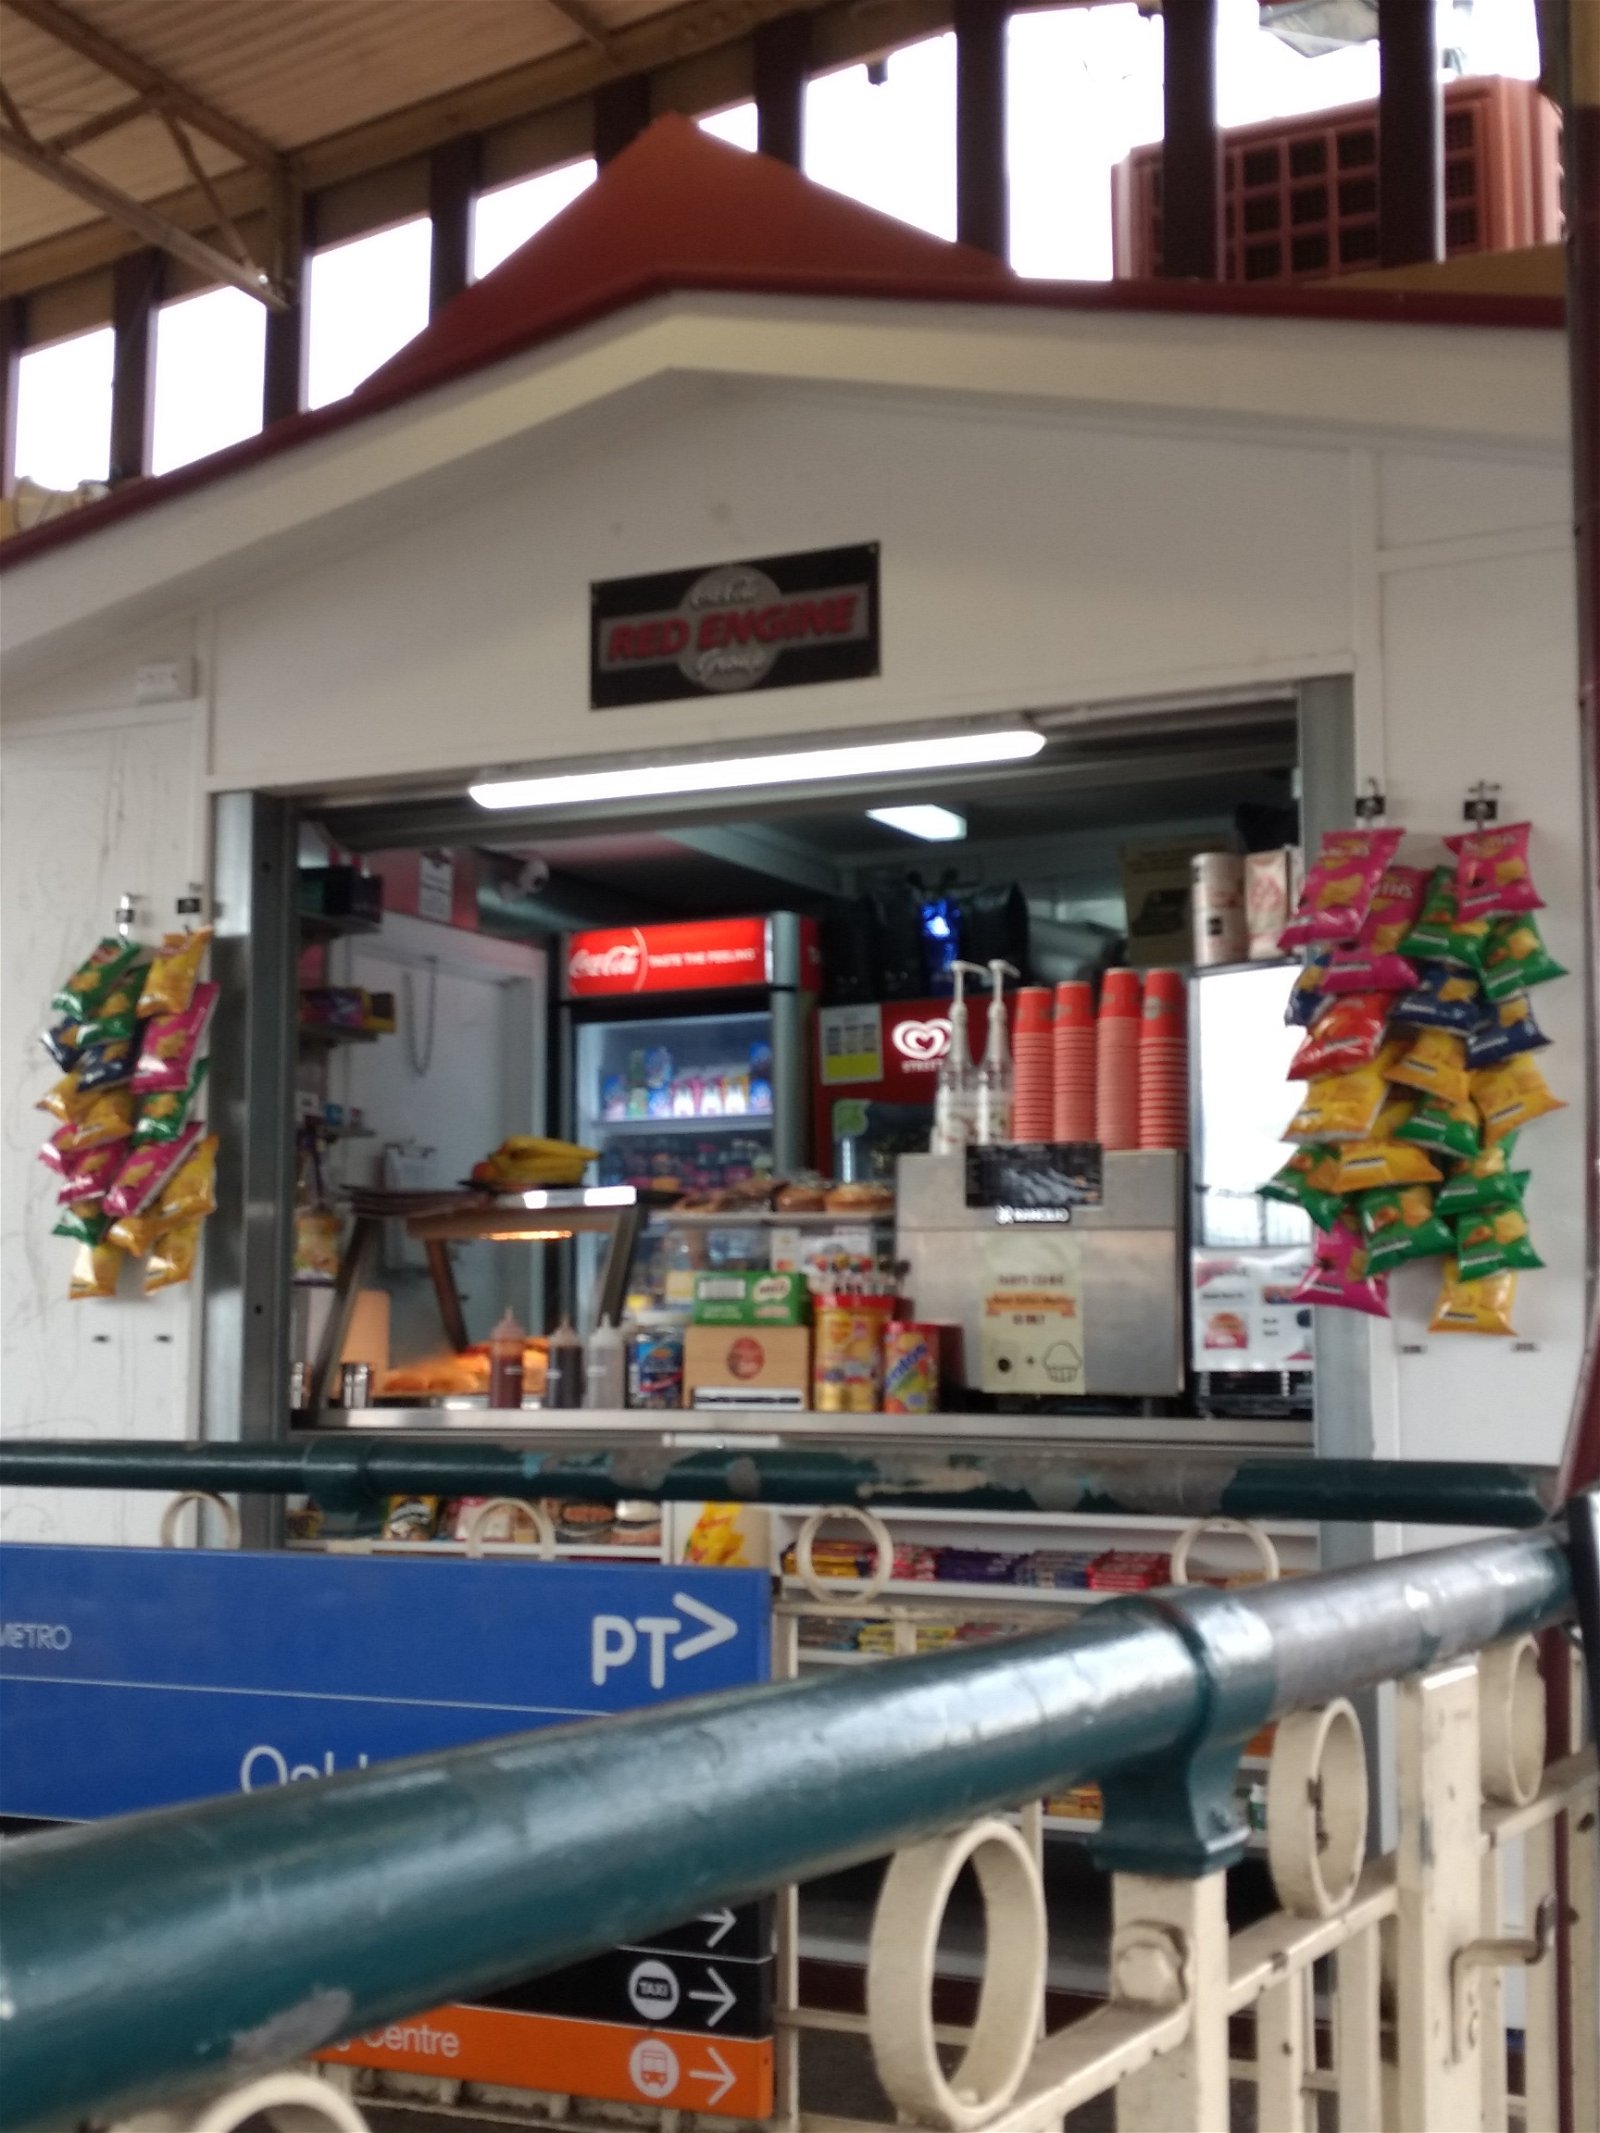 Red Engine Cafe - Food Delivery Shop